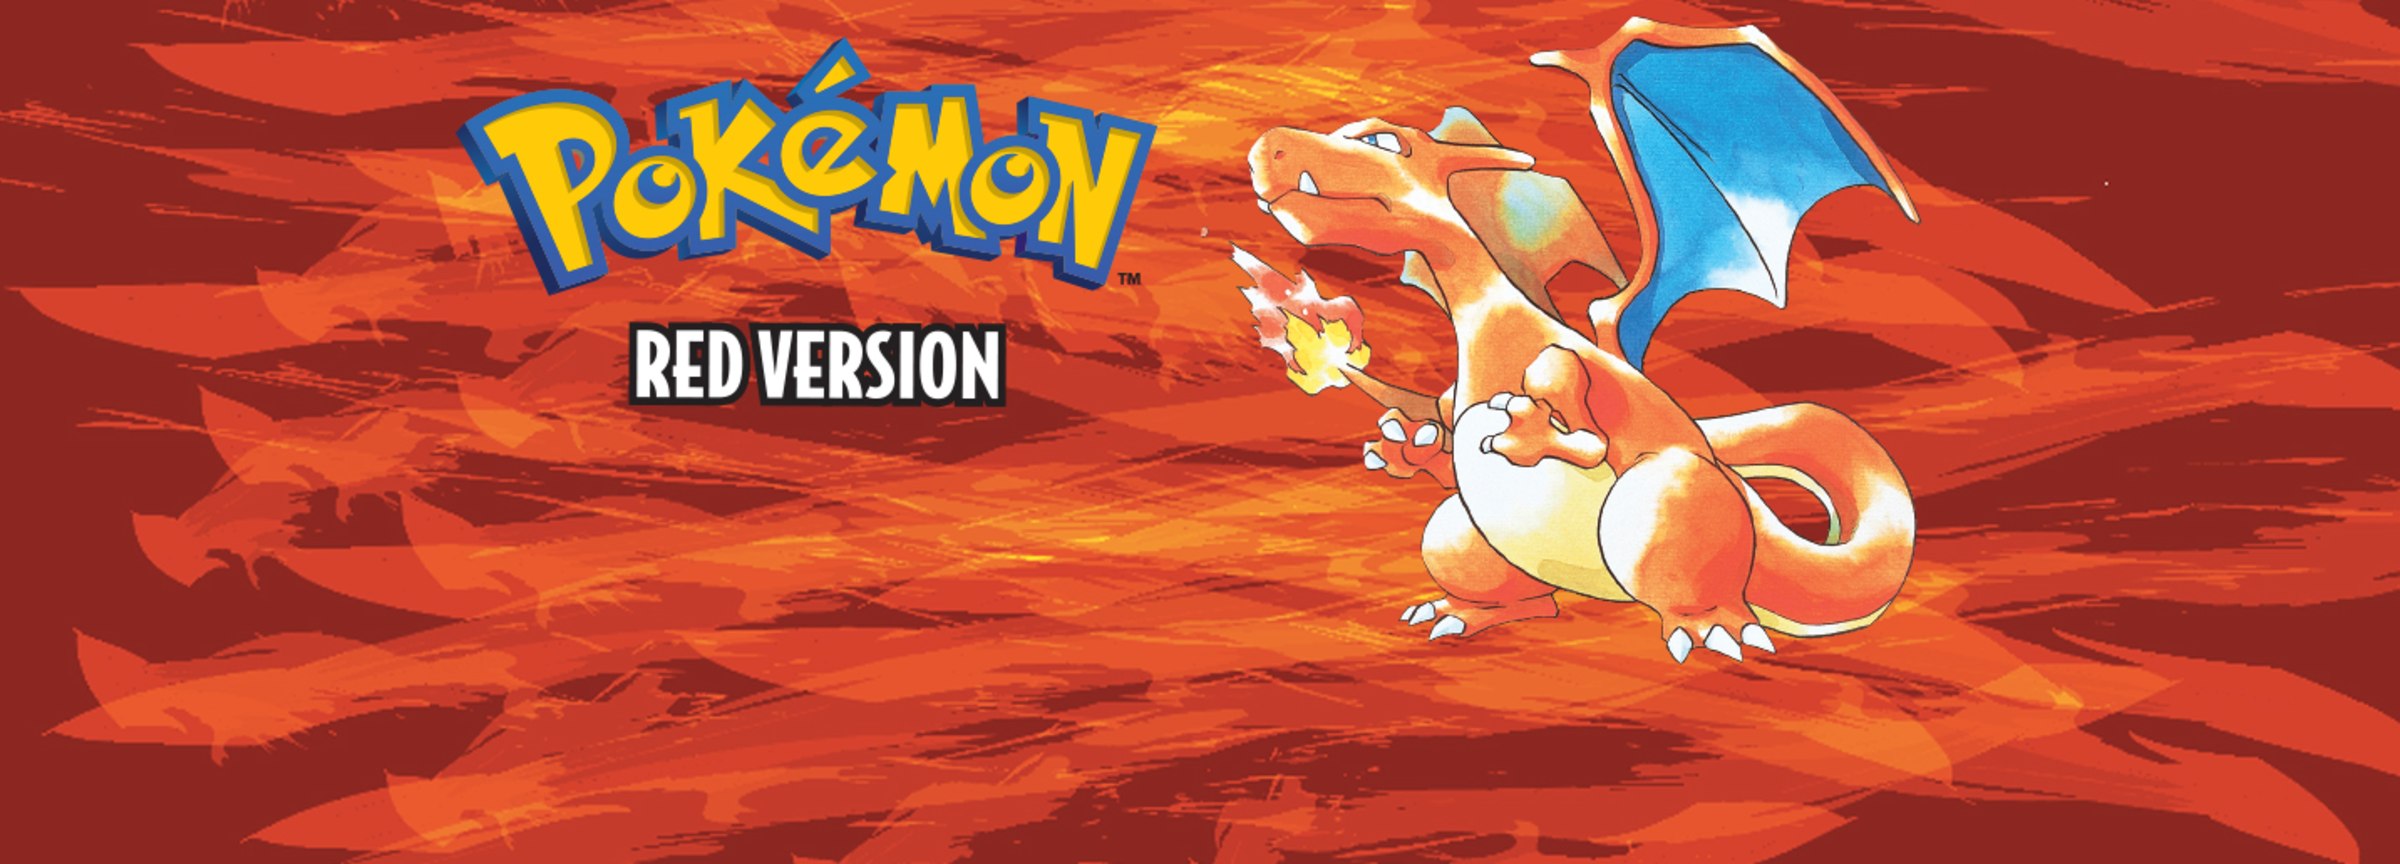 Pokémon Red Version for Nintendo 3DS - Nintendo Official Site